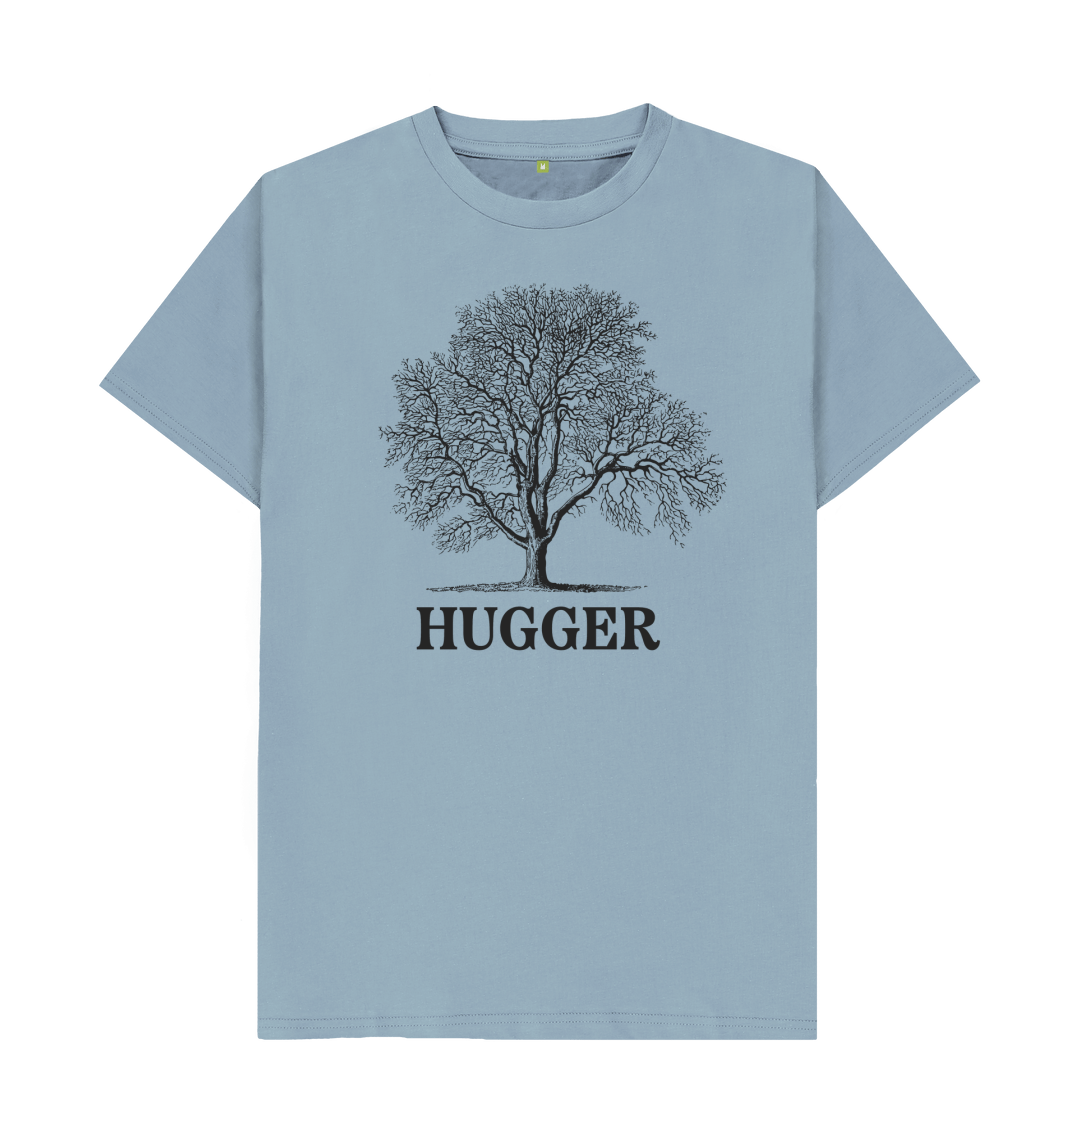 Tree Hugger T Shirt - Unique Design & Eco Friendly!